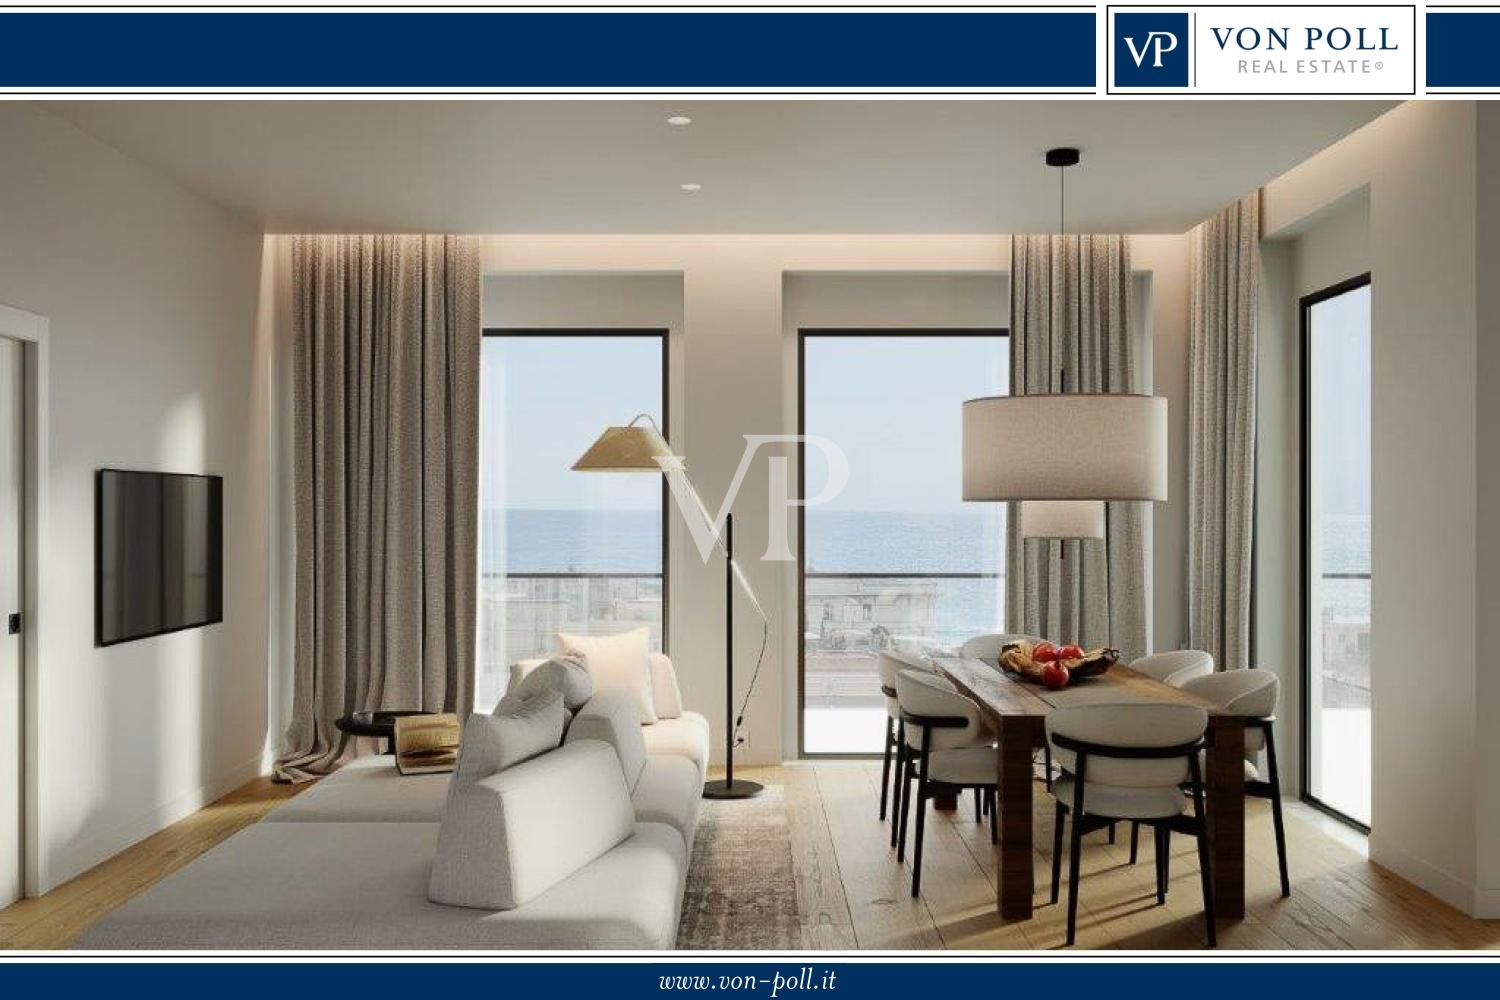 Villa Bonita - 4 unités résidentielles de haute qualité disponibles